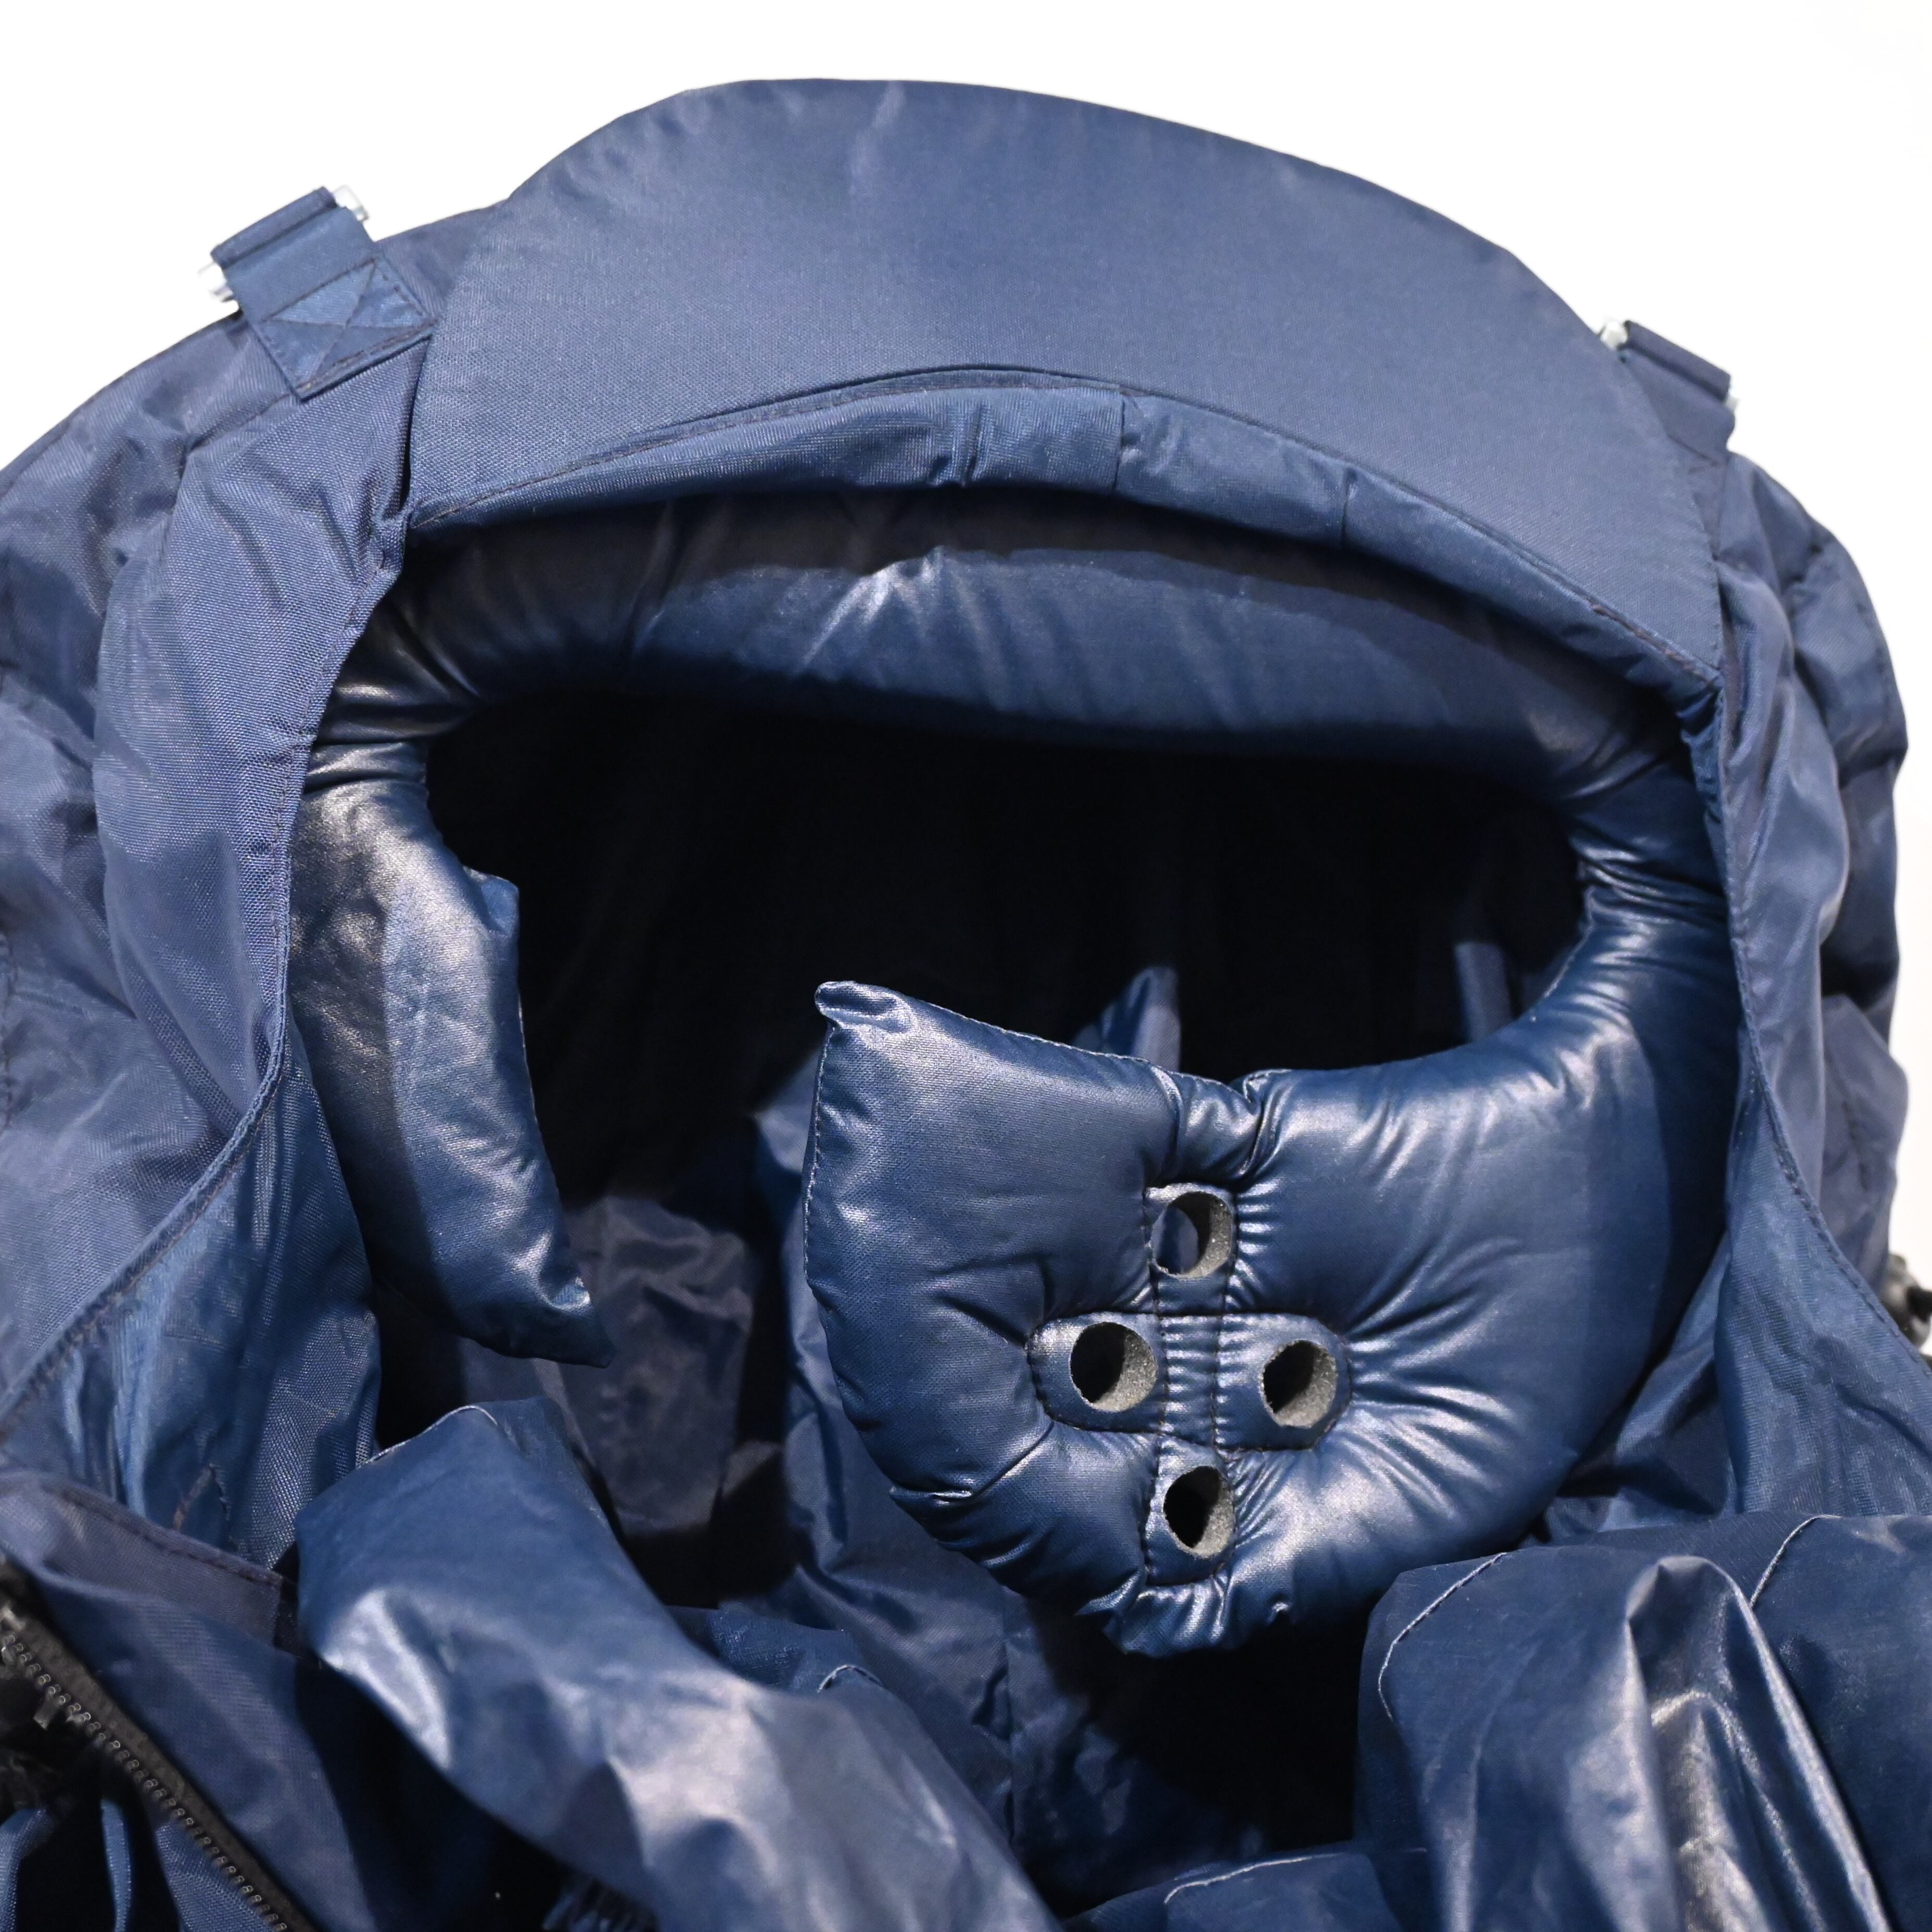 80's Royal Navy Foul weather jacket mk3 ロイヤルネイビー フォー